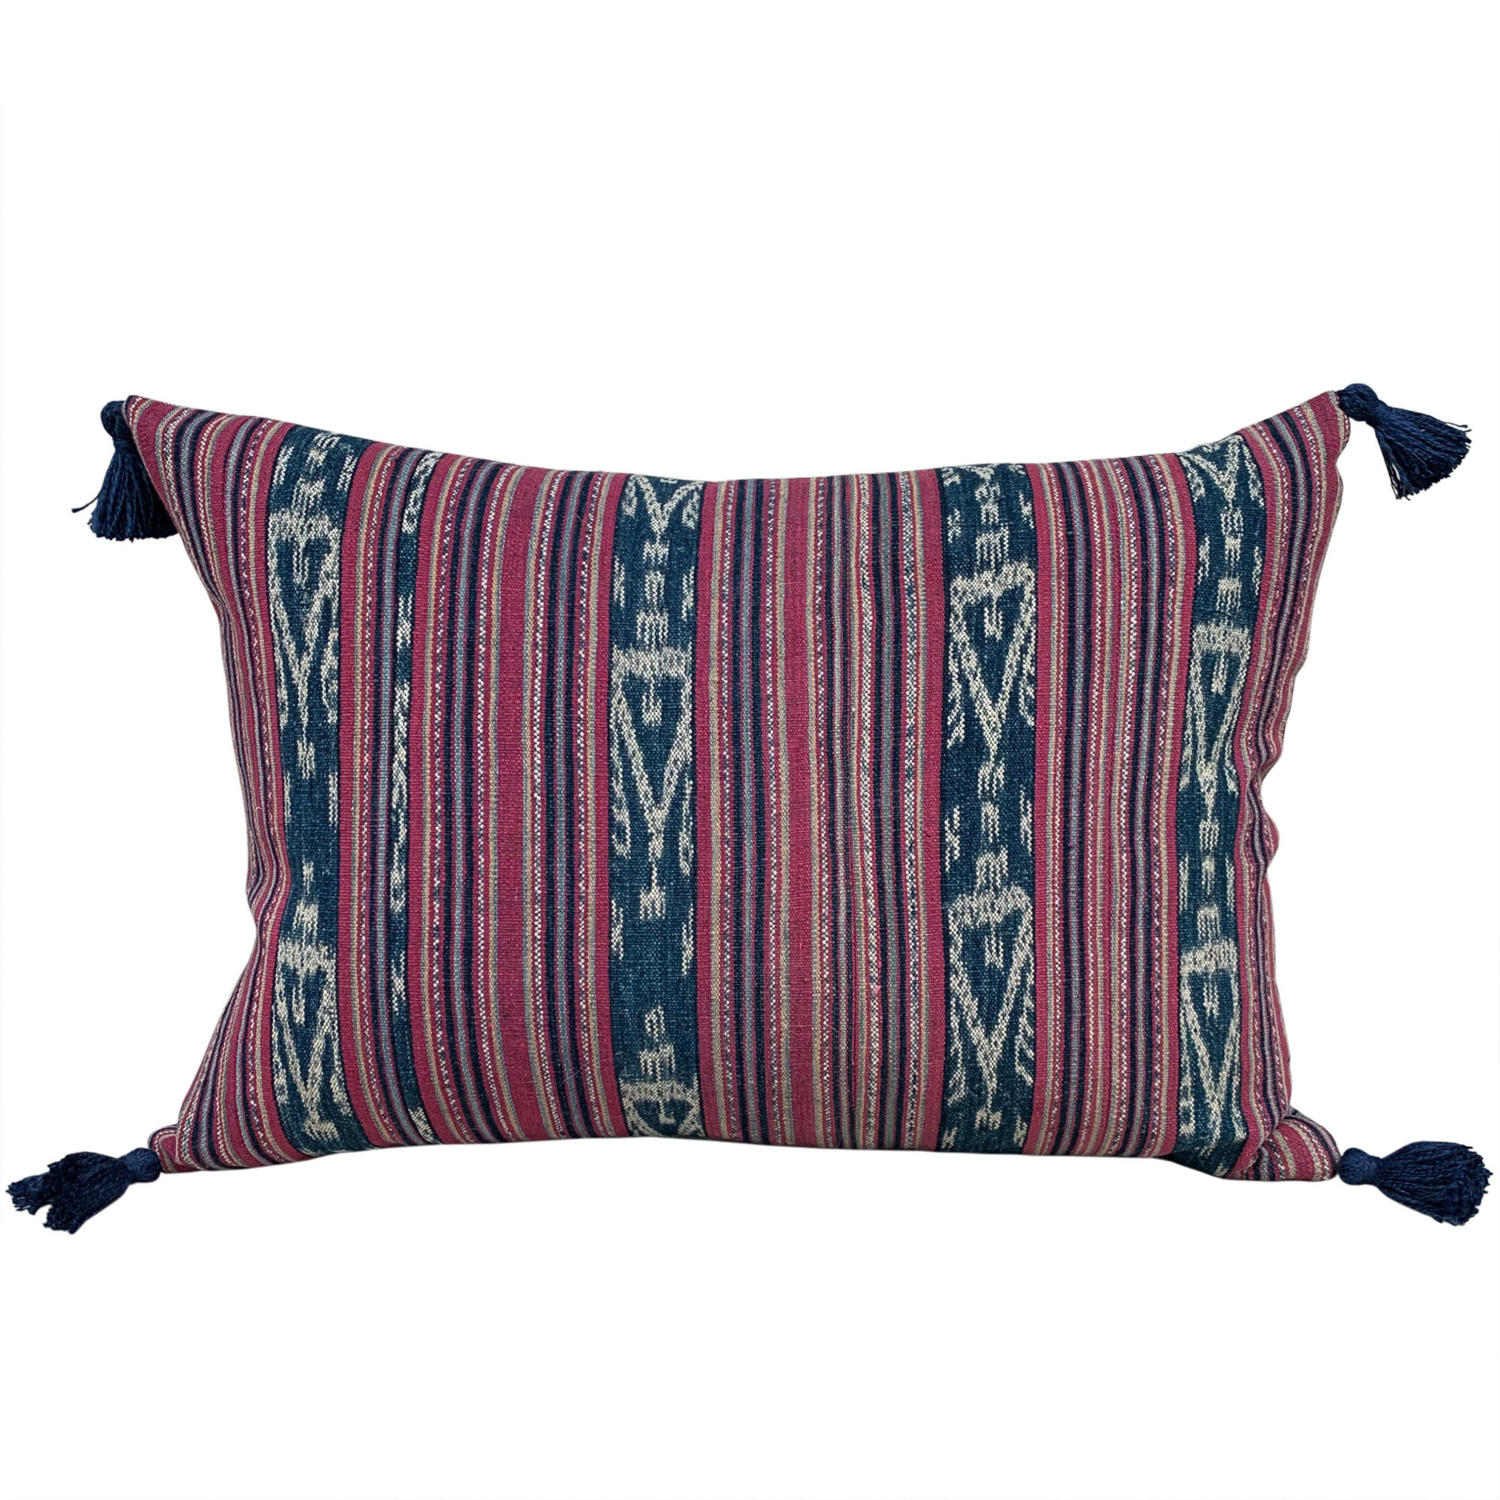 Cochineal ikat cushion